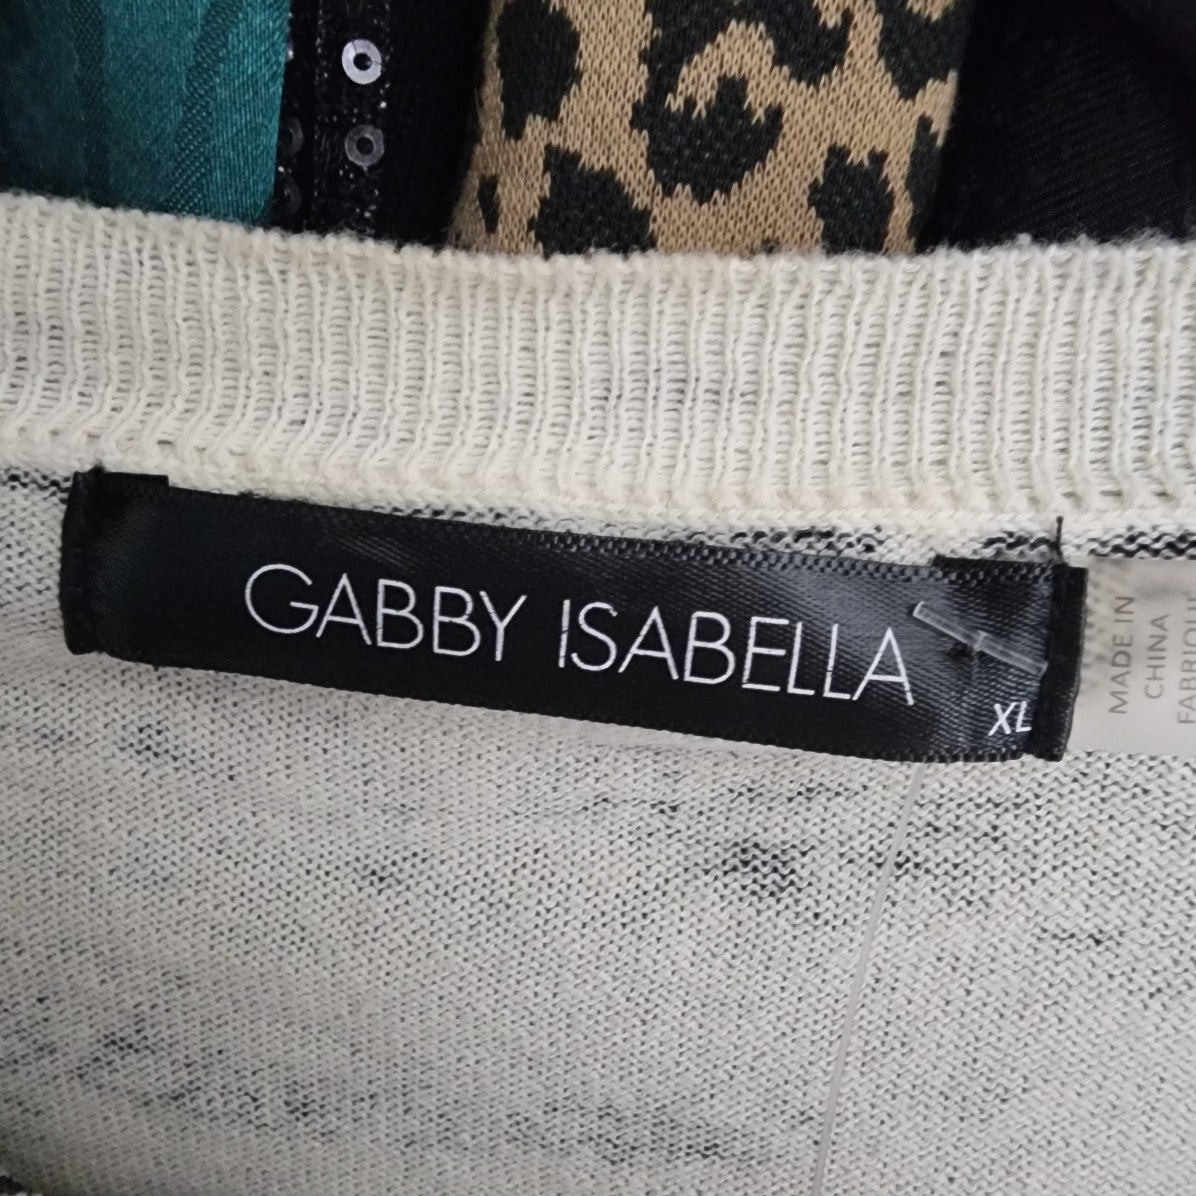 Gabby Isabella White & Black Knit Sweater Size XL